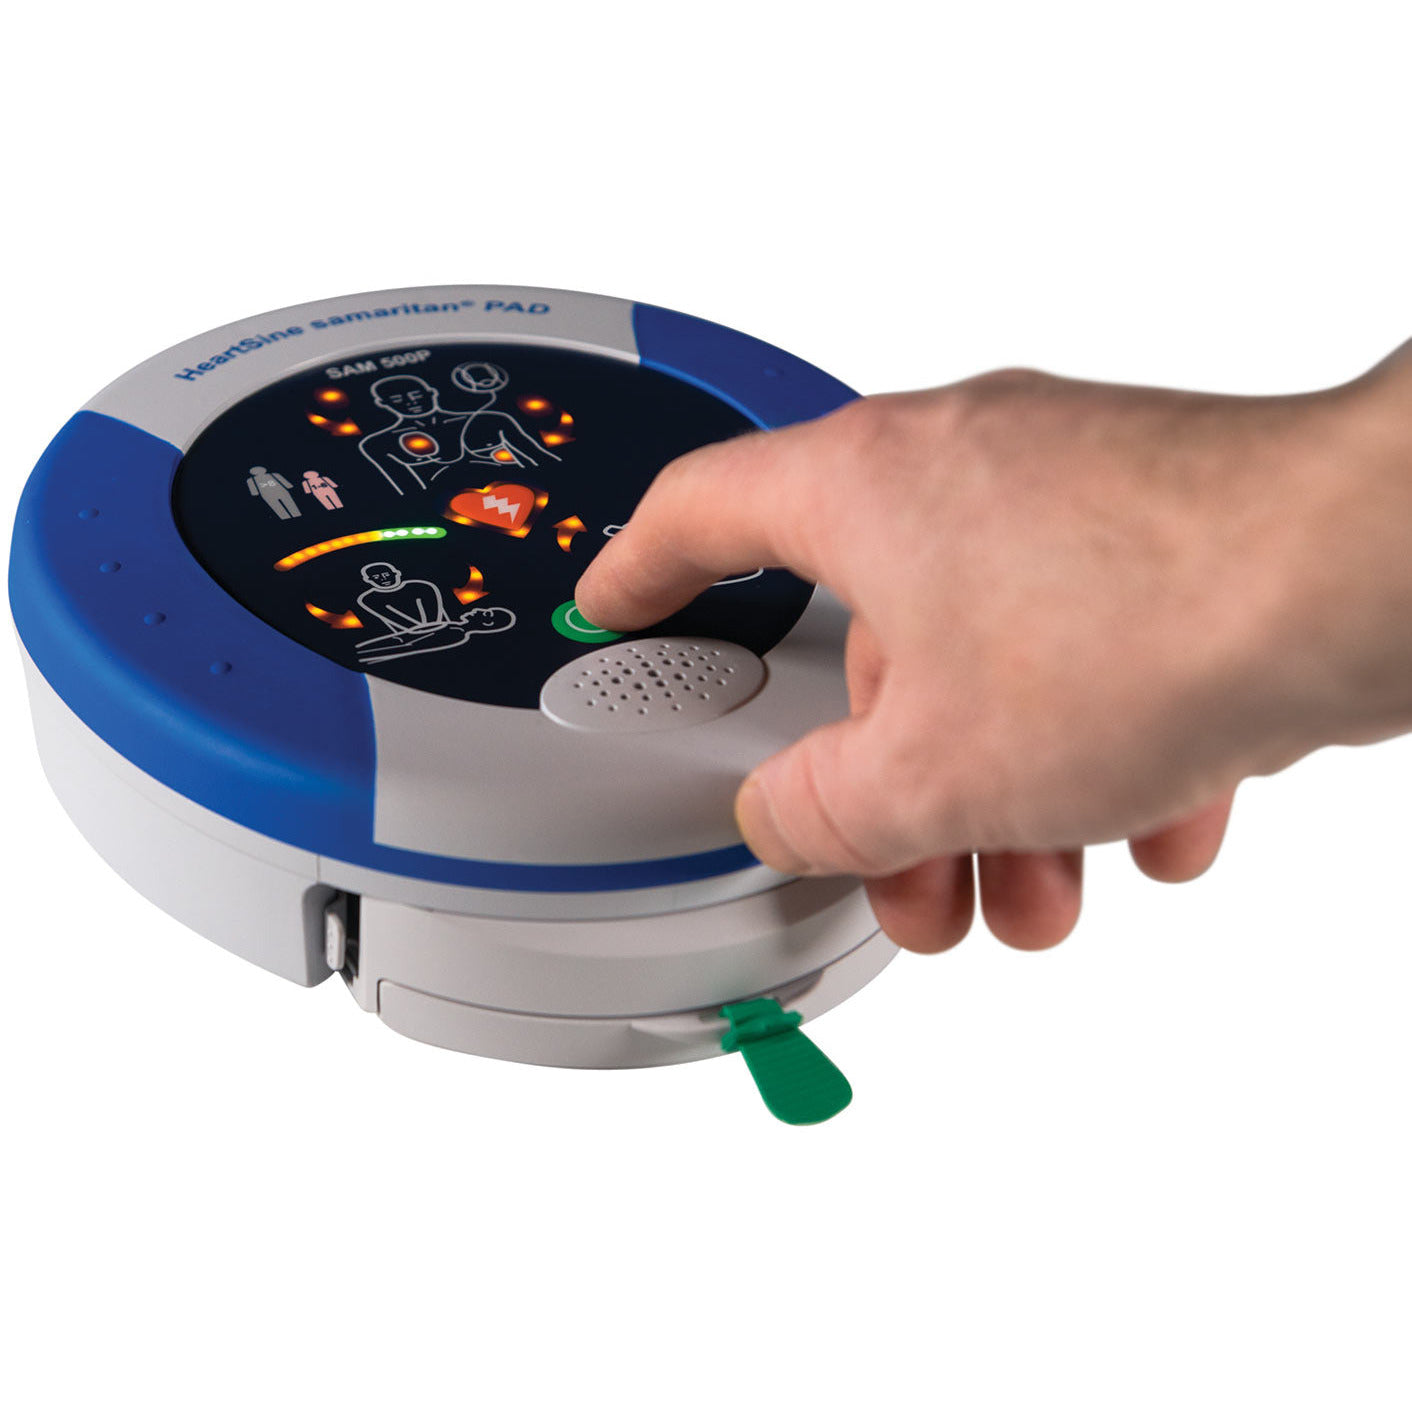 HeartSine Samaritan PAD 500P Semi Automatic AED Defibrillator with Carry Case